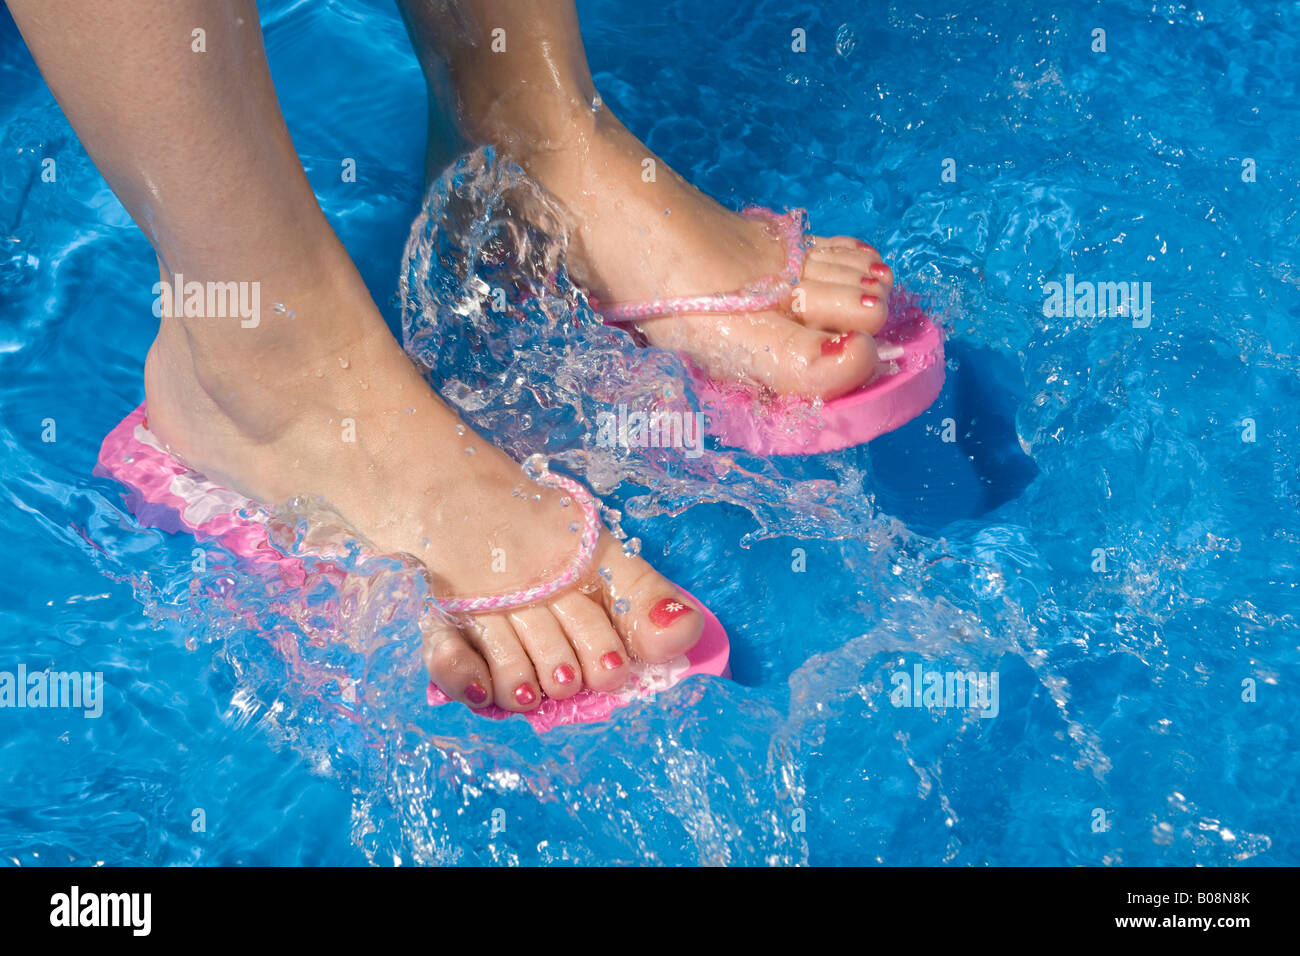 Feet wearing flip-flops in a paddling pool Stock Photo